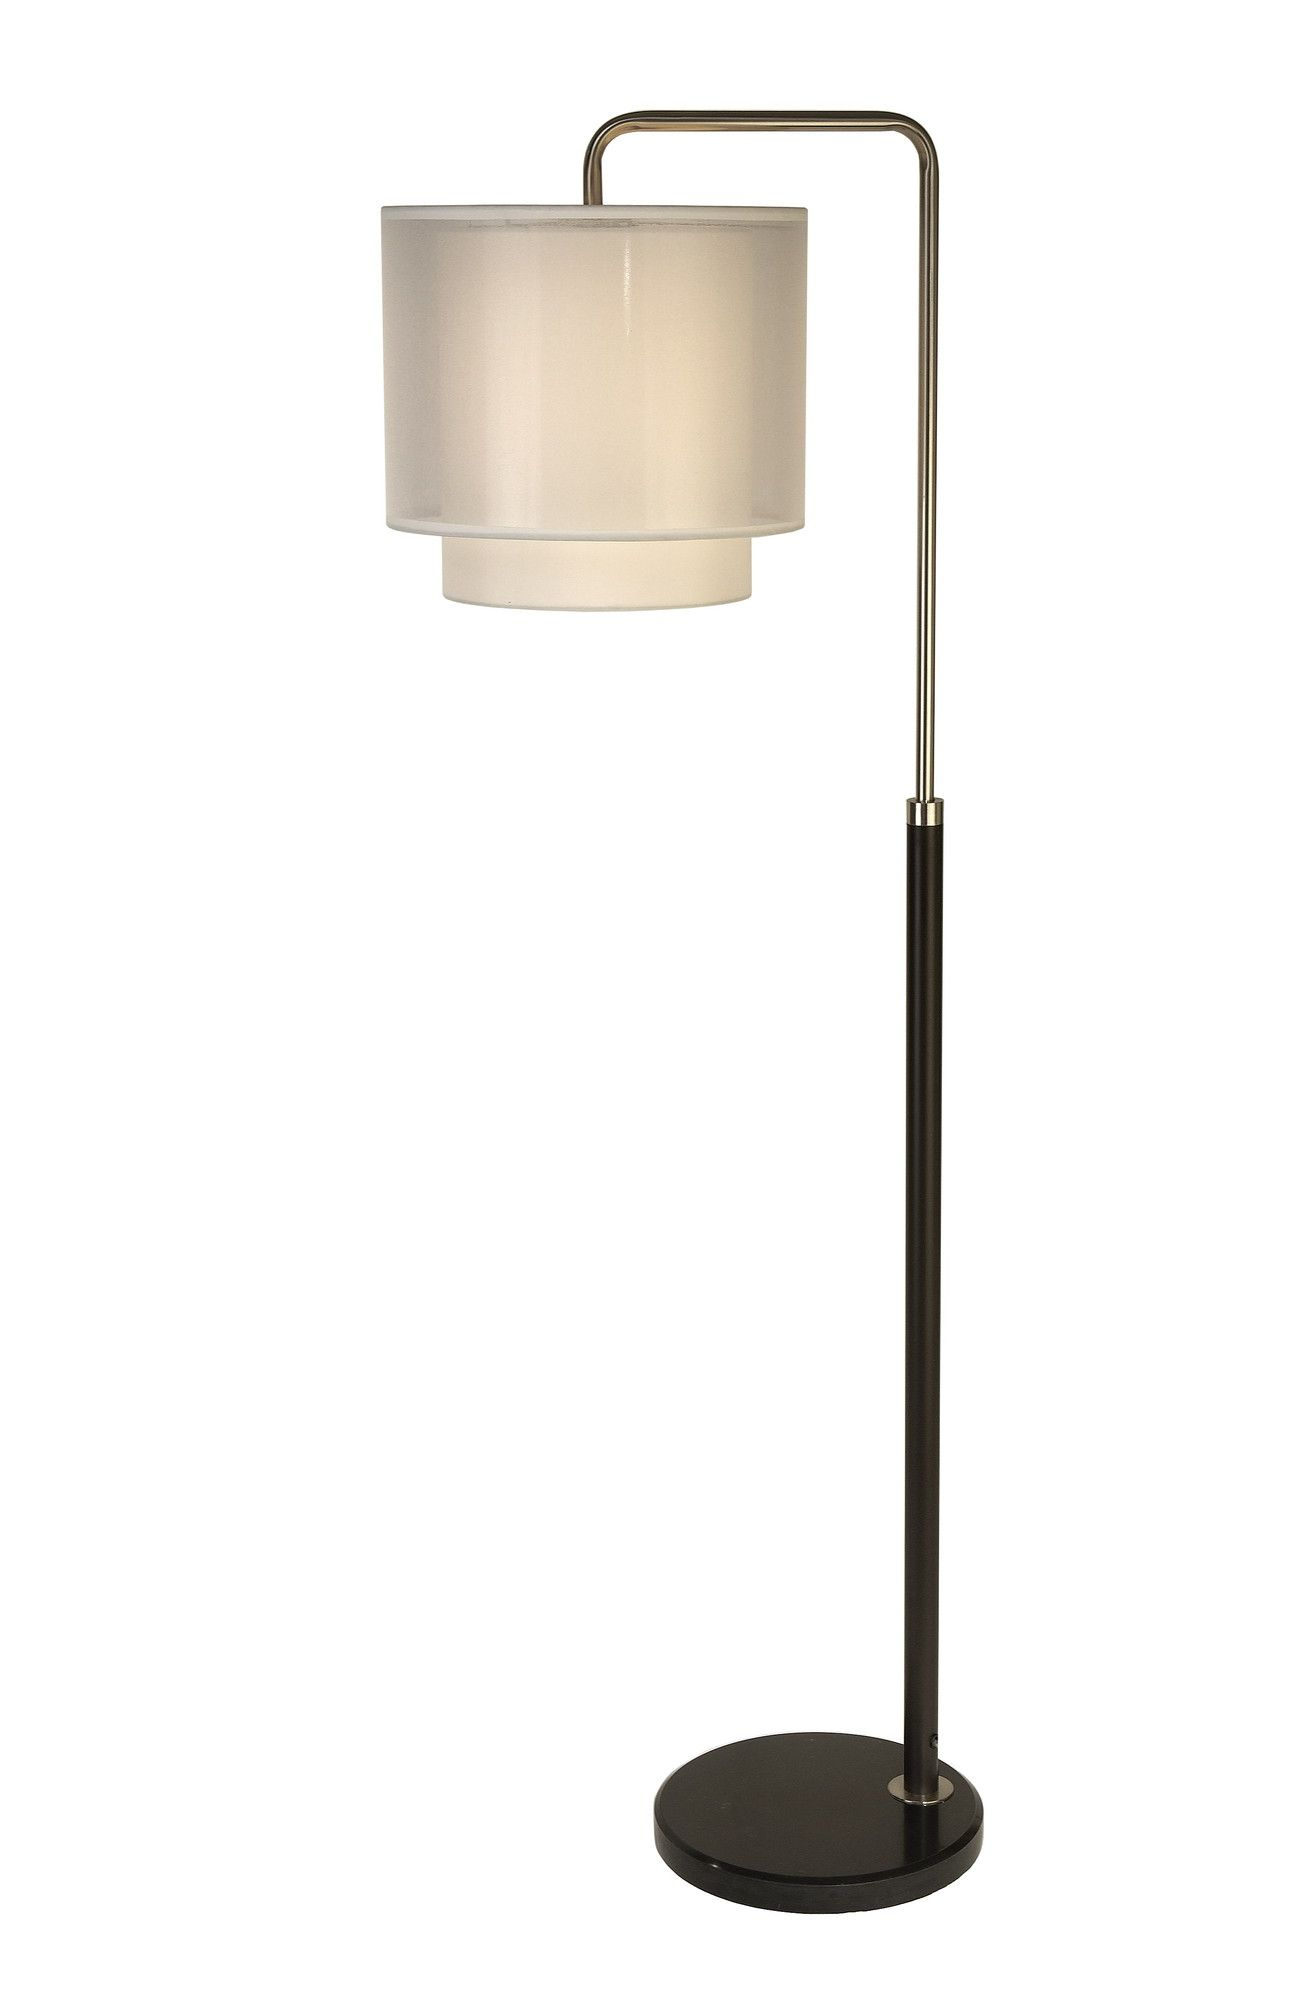 Trend Lighting Corp Roosevelt Floor Lamp Allmodern regarding sizing 1302 X 2000